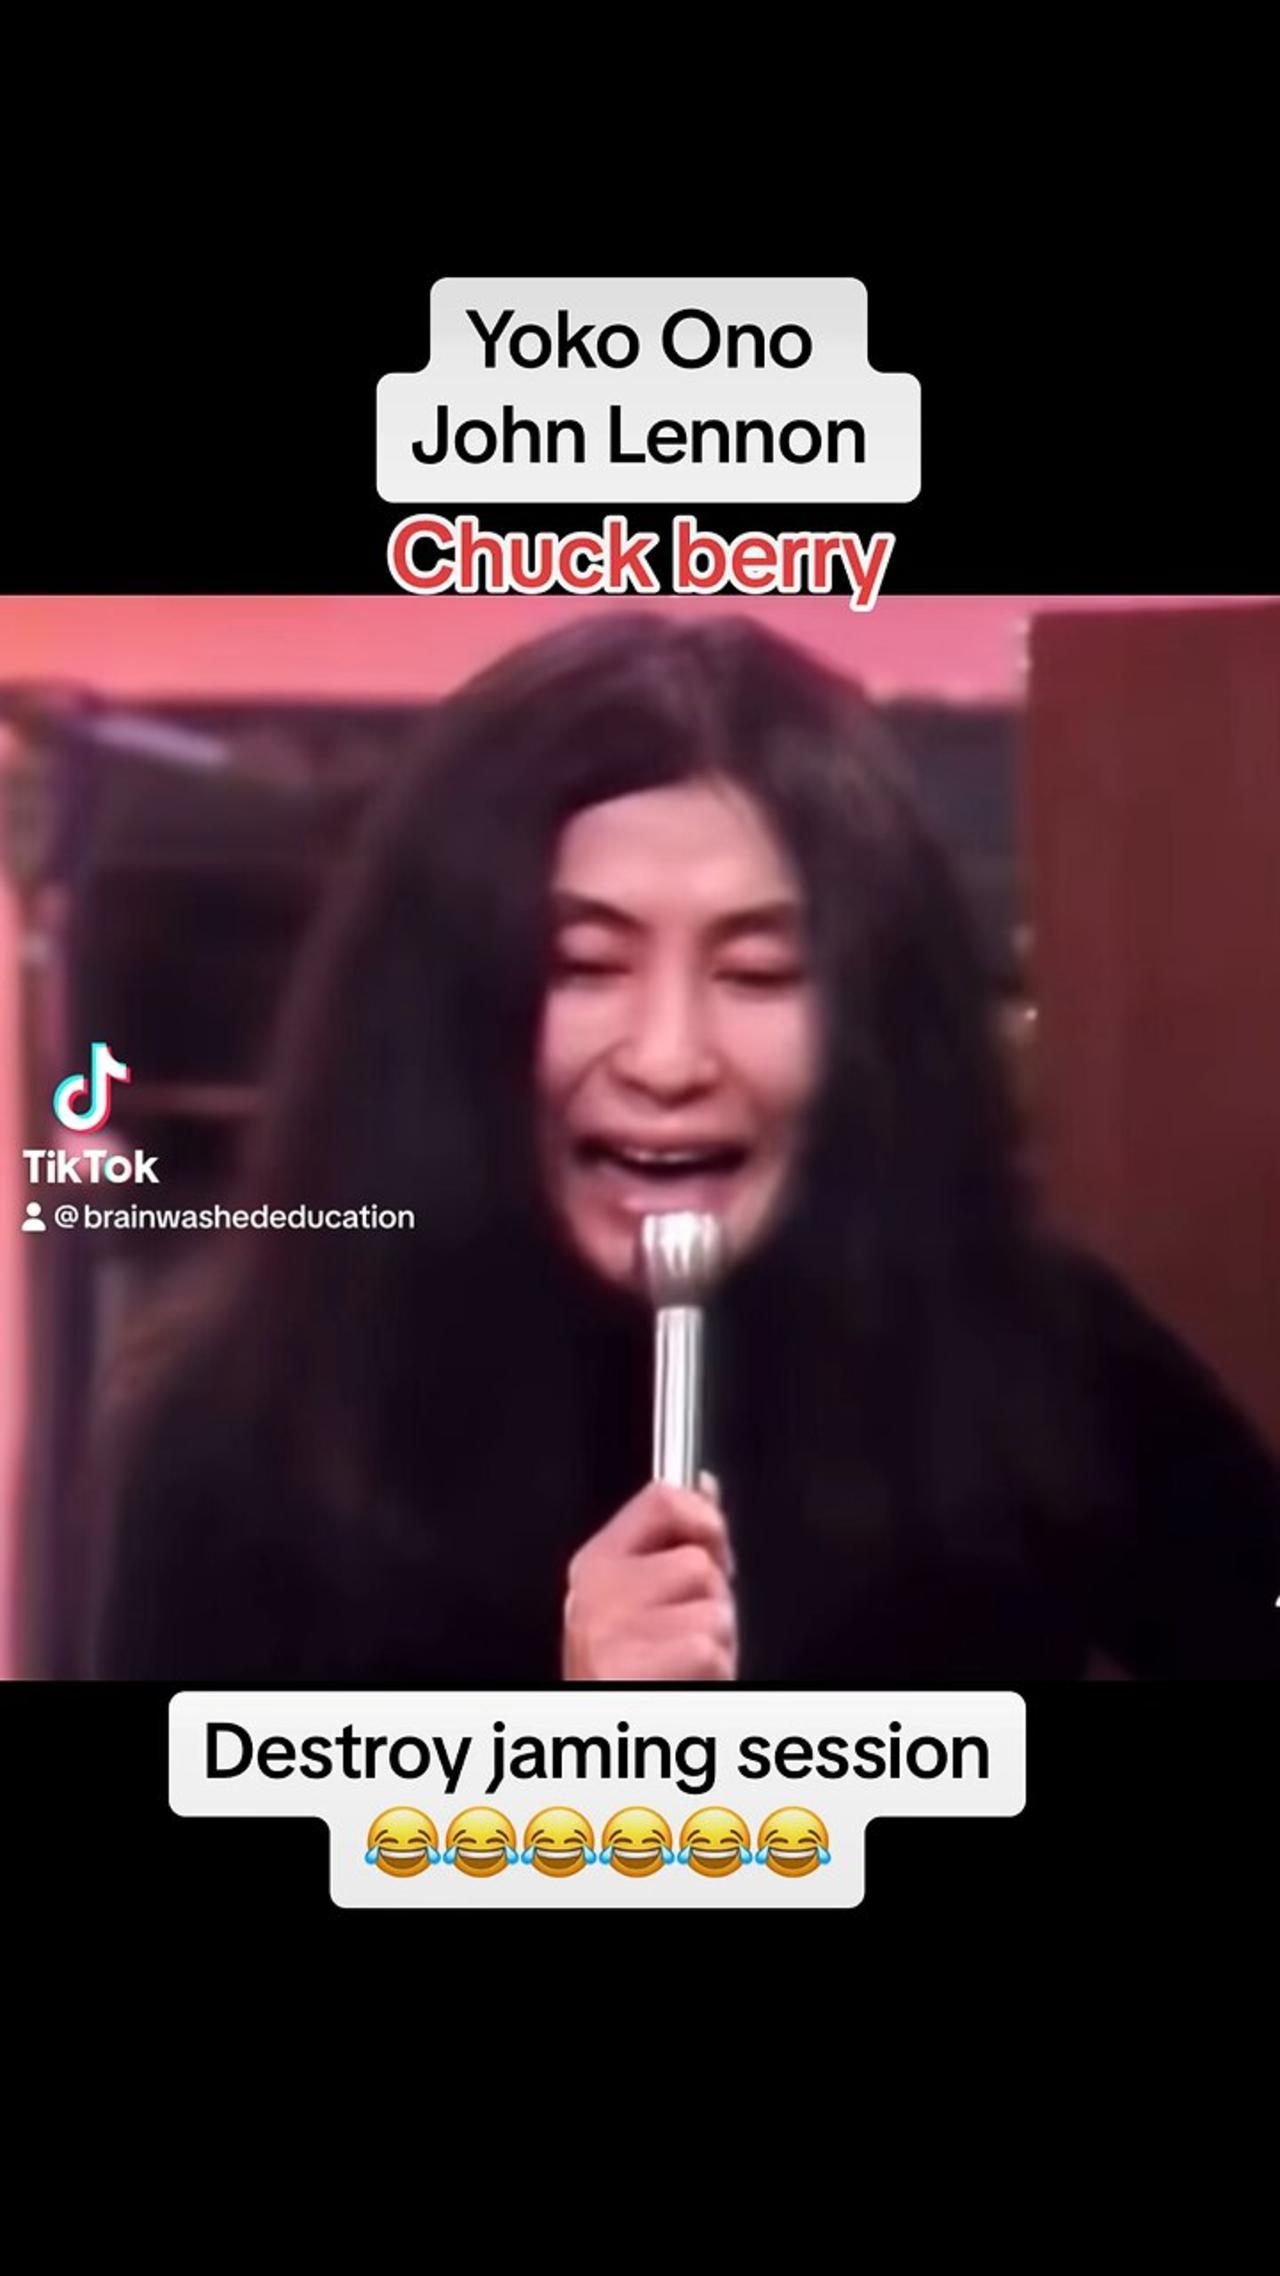 Yoko Ono destroys jamming sessions